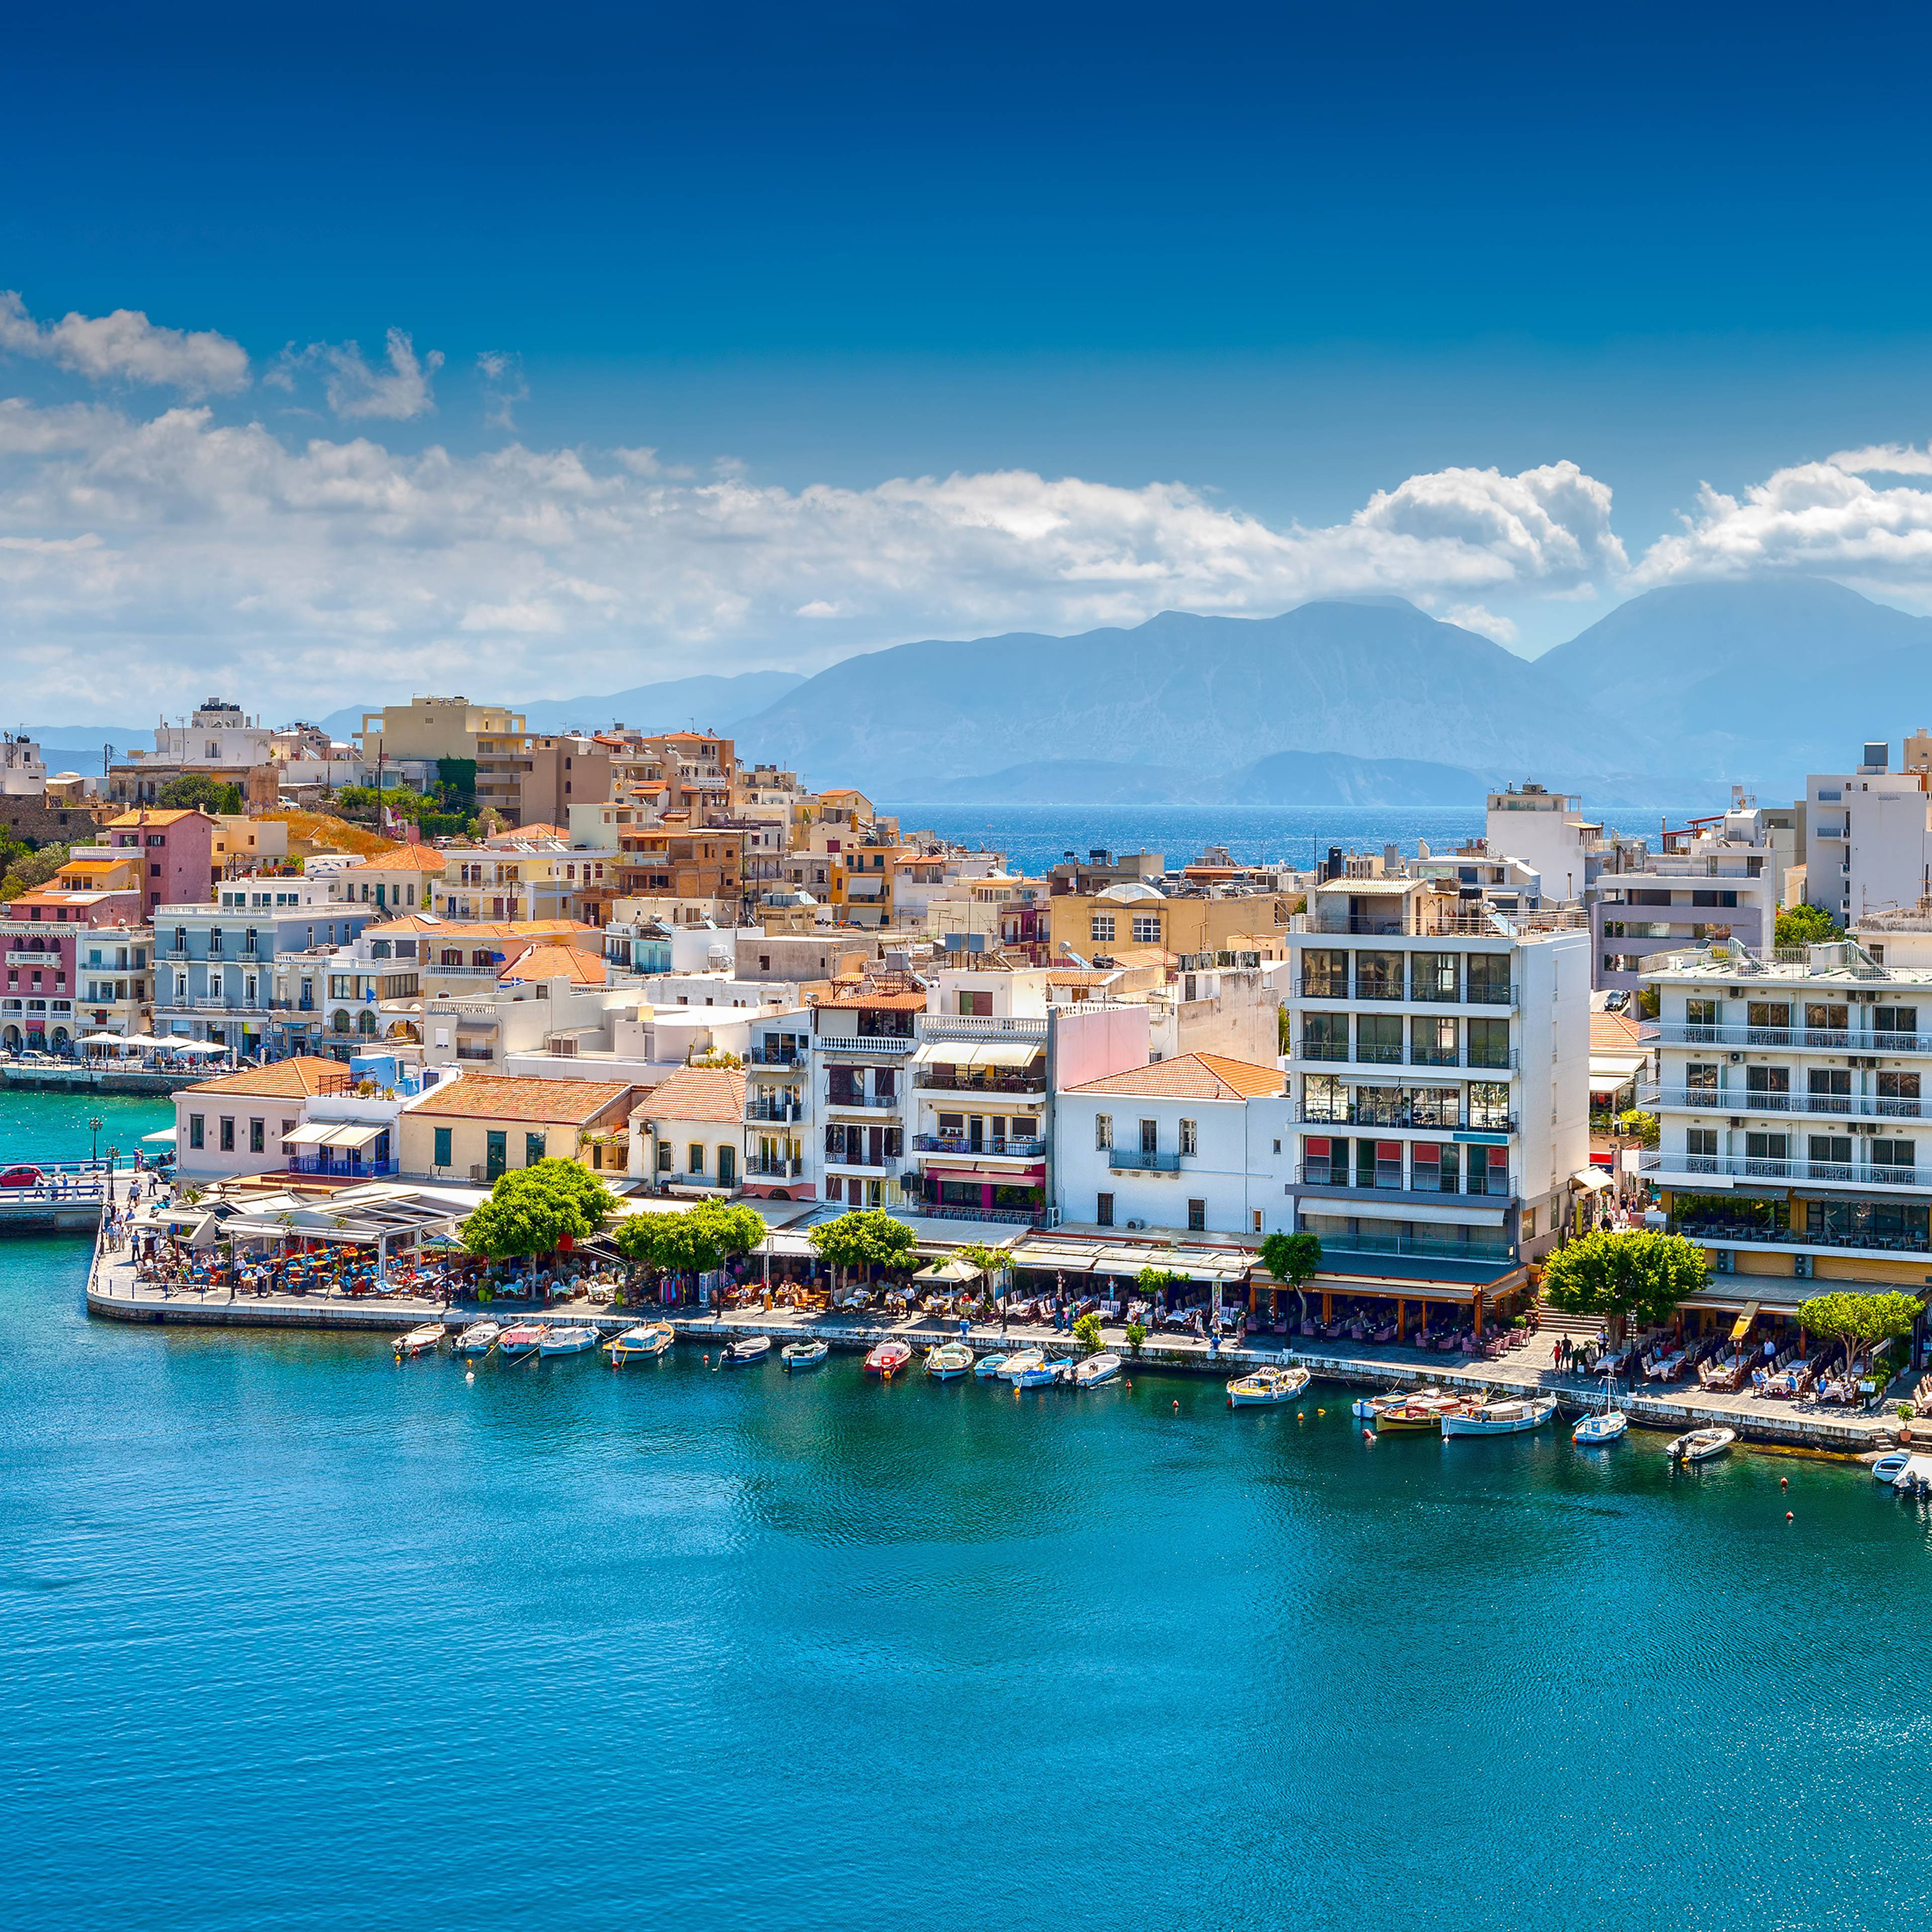 Städtereise Kreta - Reise jetzt individuell gestalten